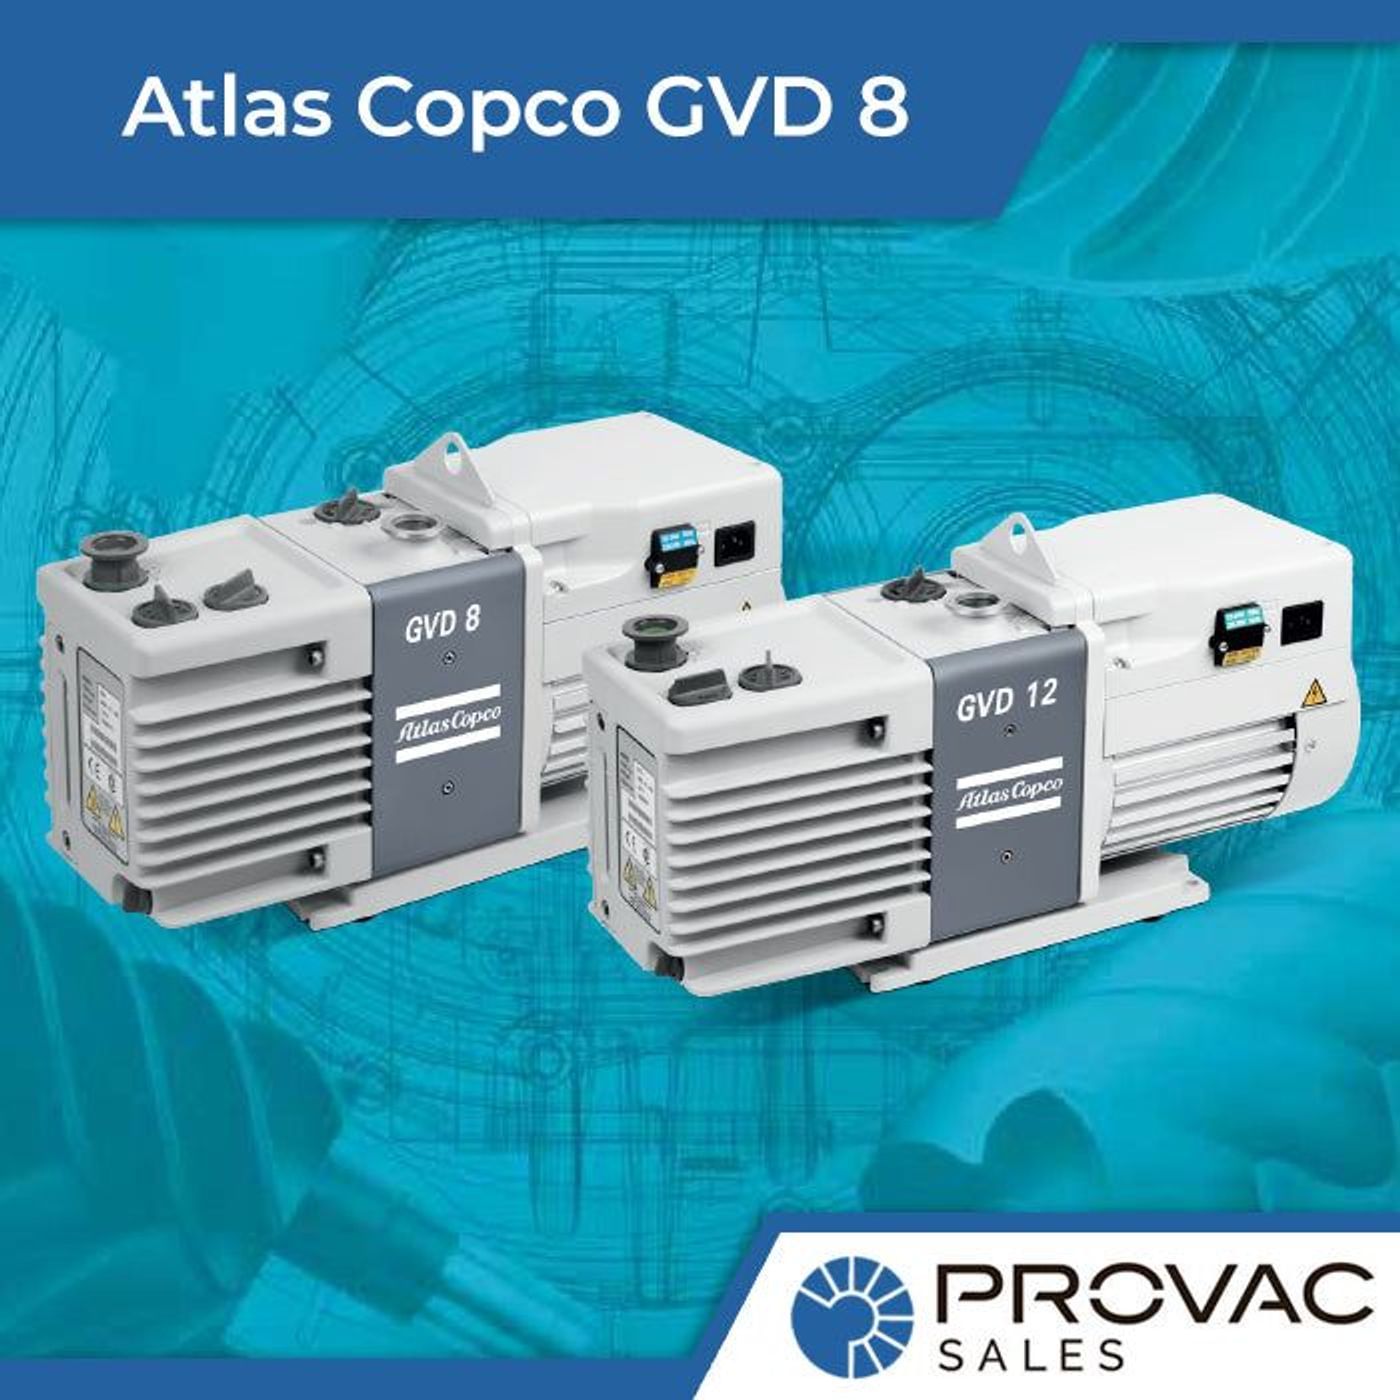 On Sale Now: Atlas Copco GVD 8 Rotary Vane Pump